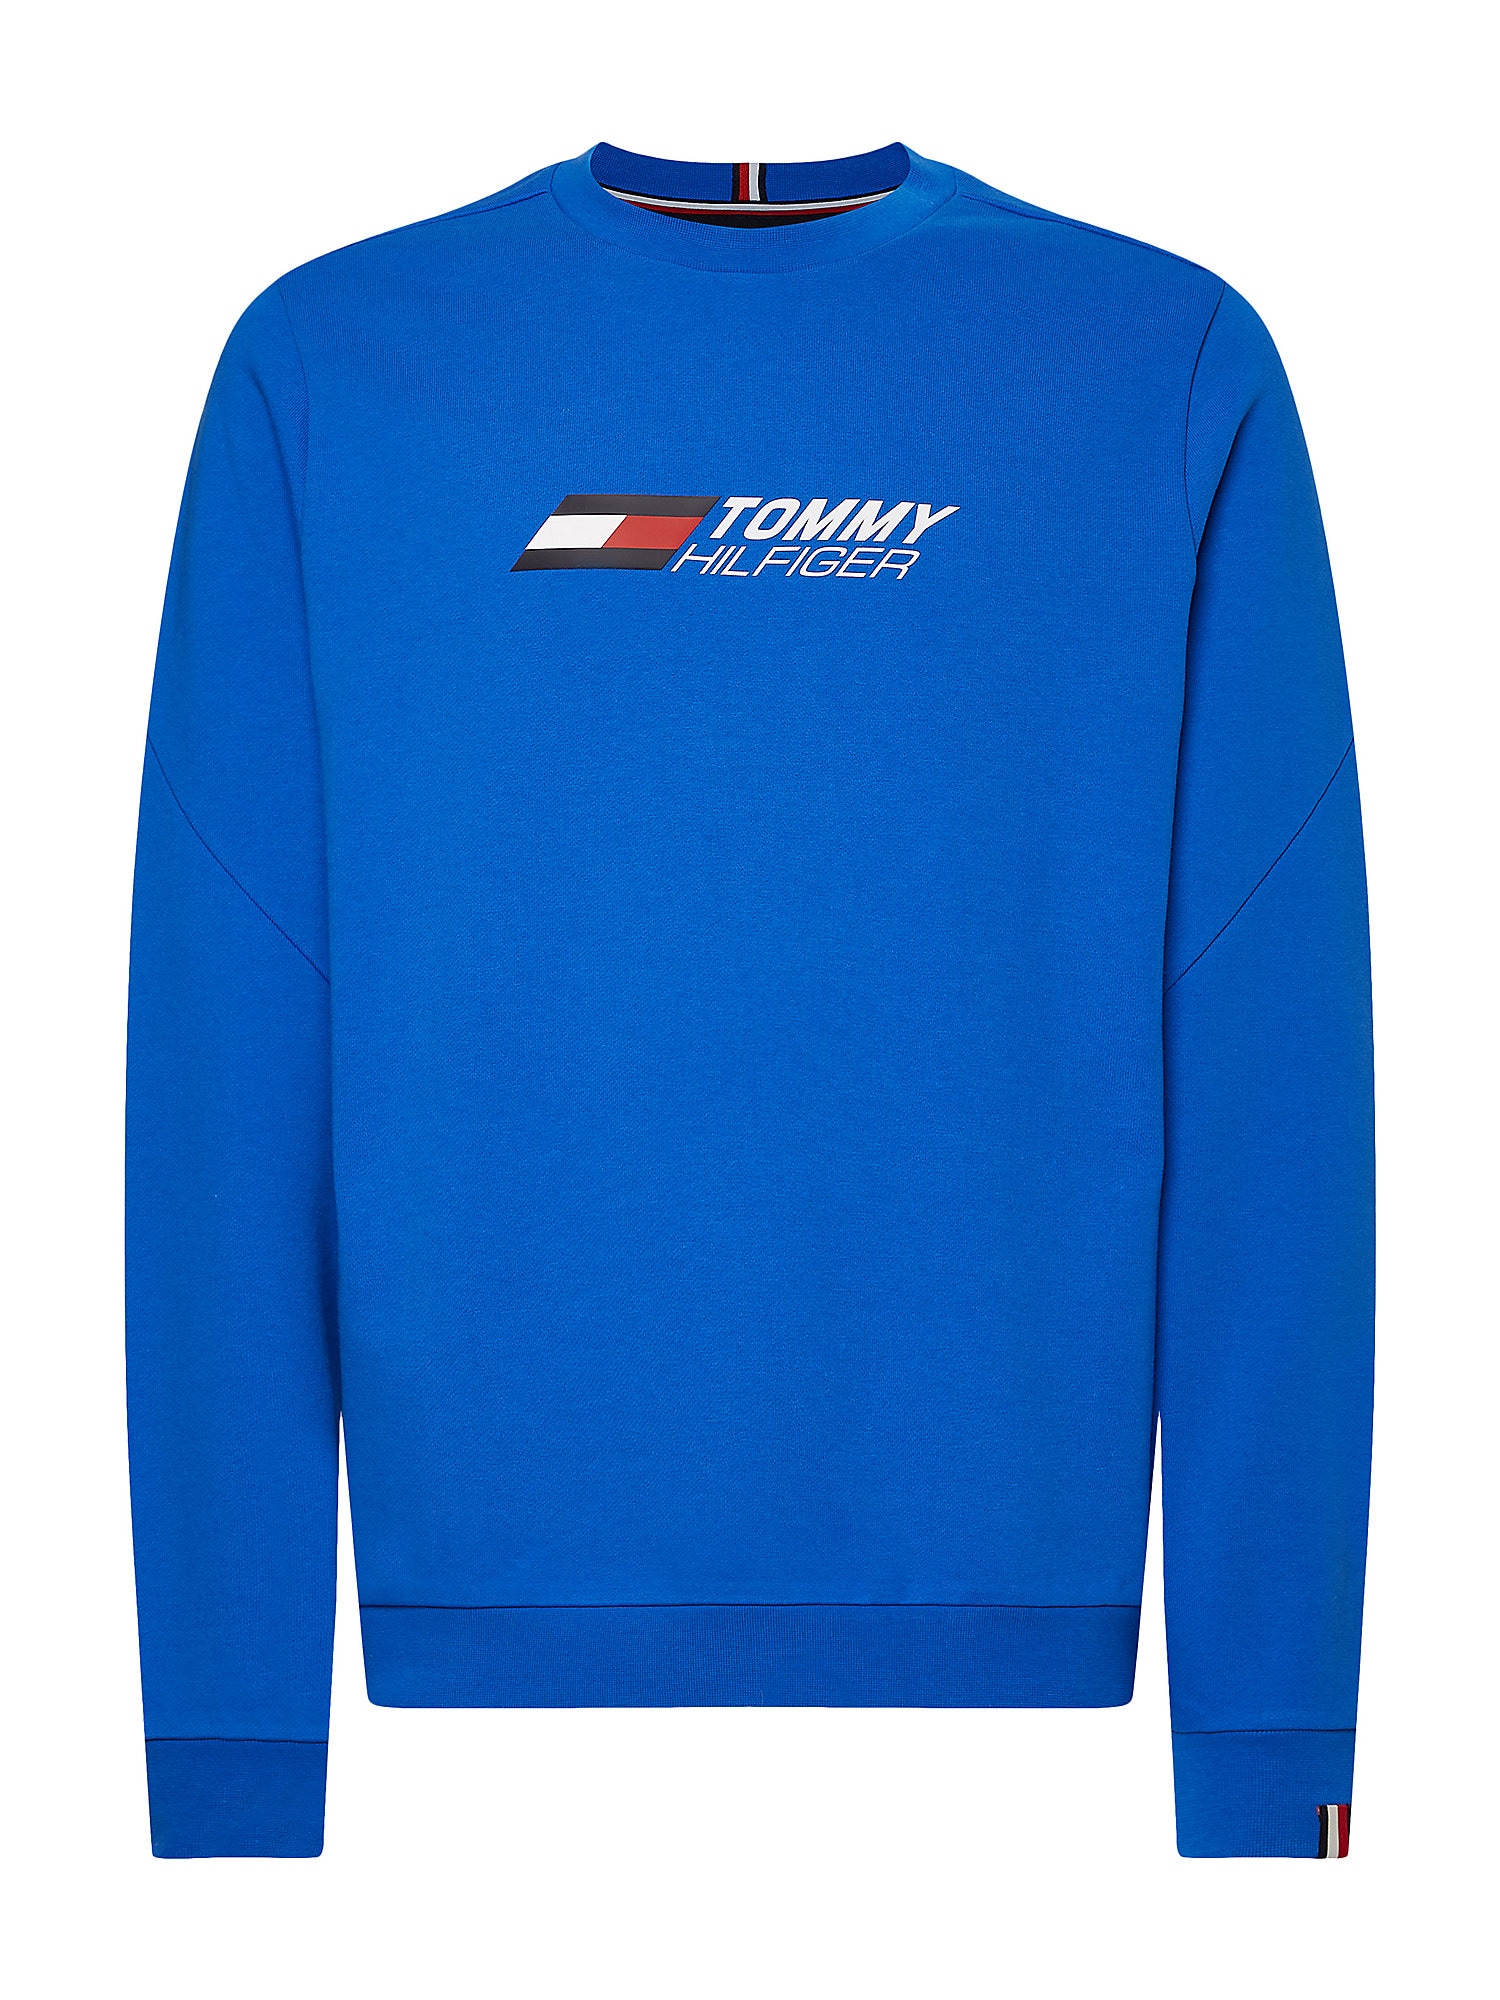 Tommy Hilfiger TOMMY HILFIGER Sweatshirt blau / rot / weiß